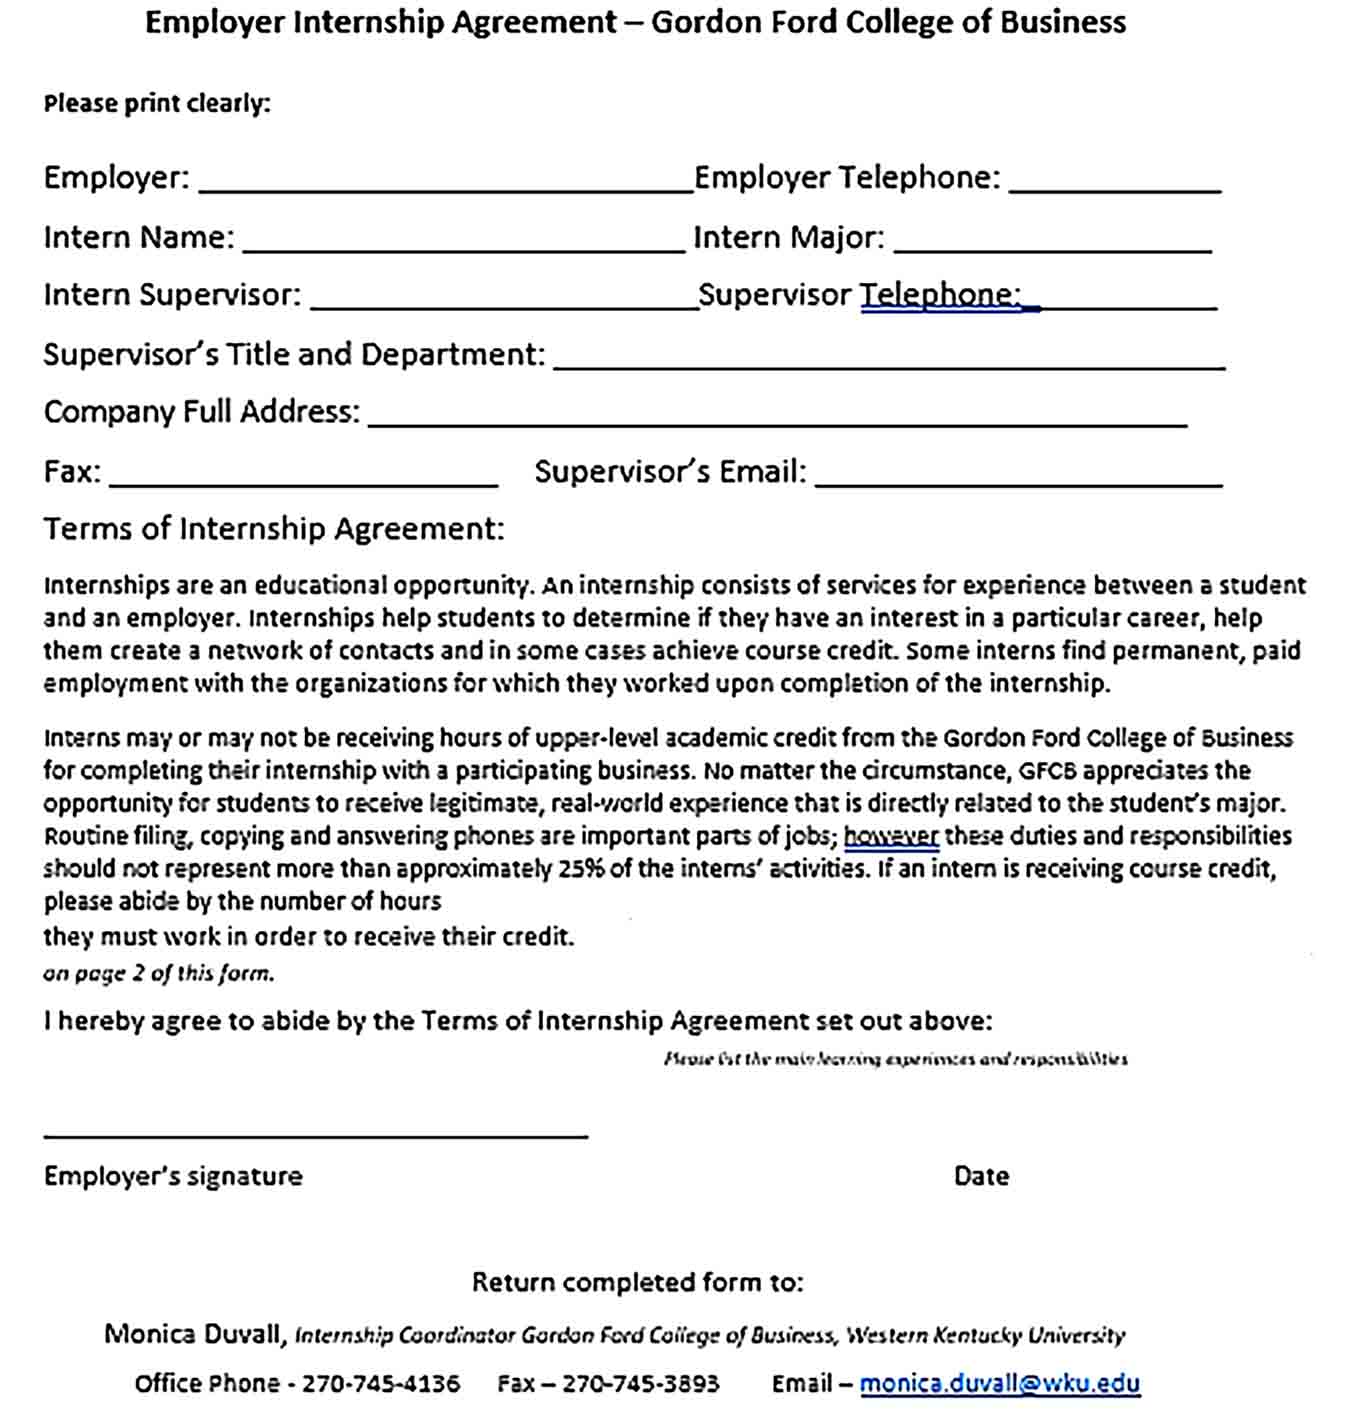 Sample Employer Internship Agreement 002